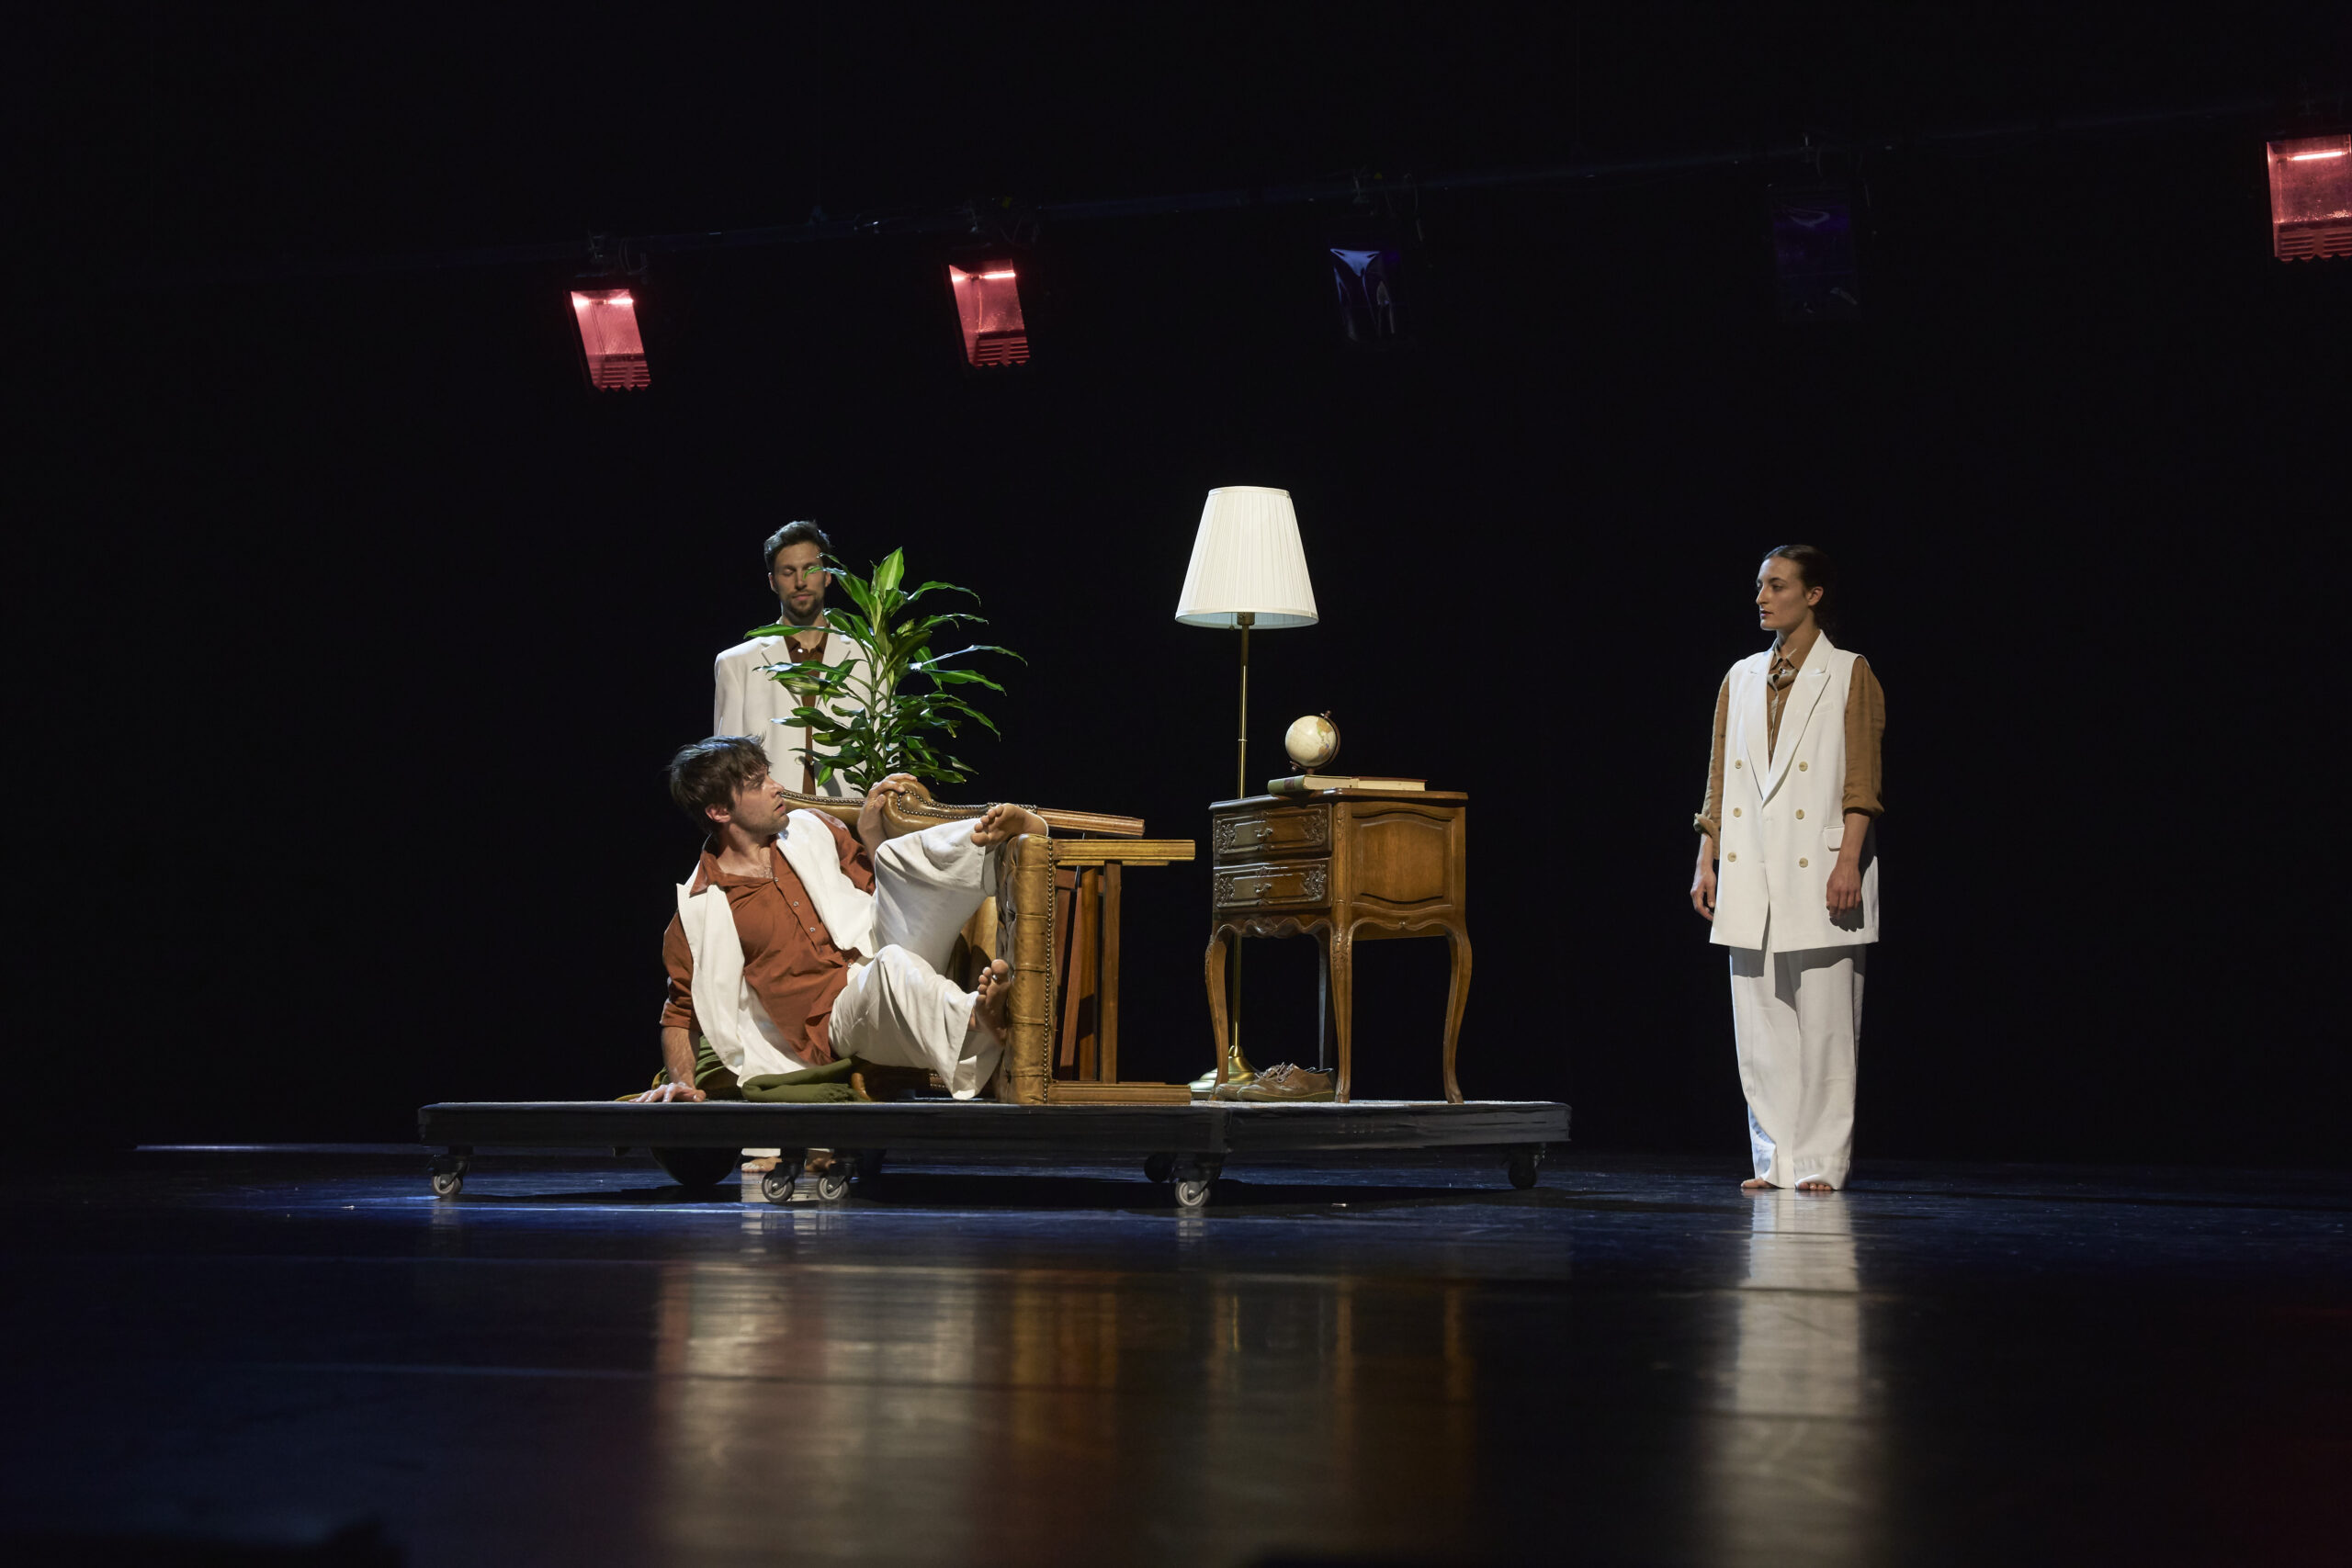 Tanz: Darko Radosavljev, Julius Olbertz, Lara Pilloni | Photo: Johannes Hoer